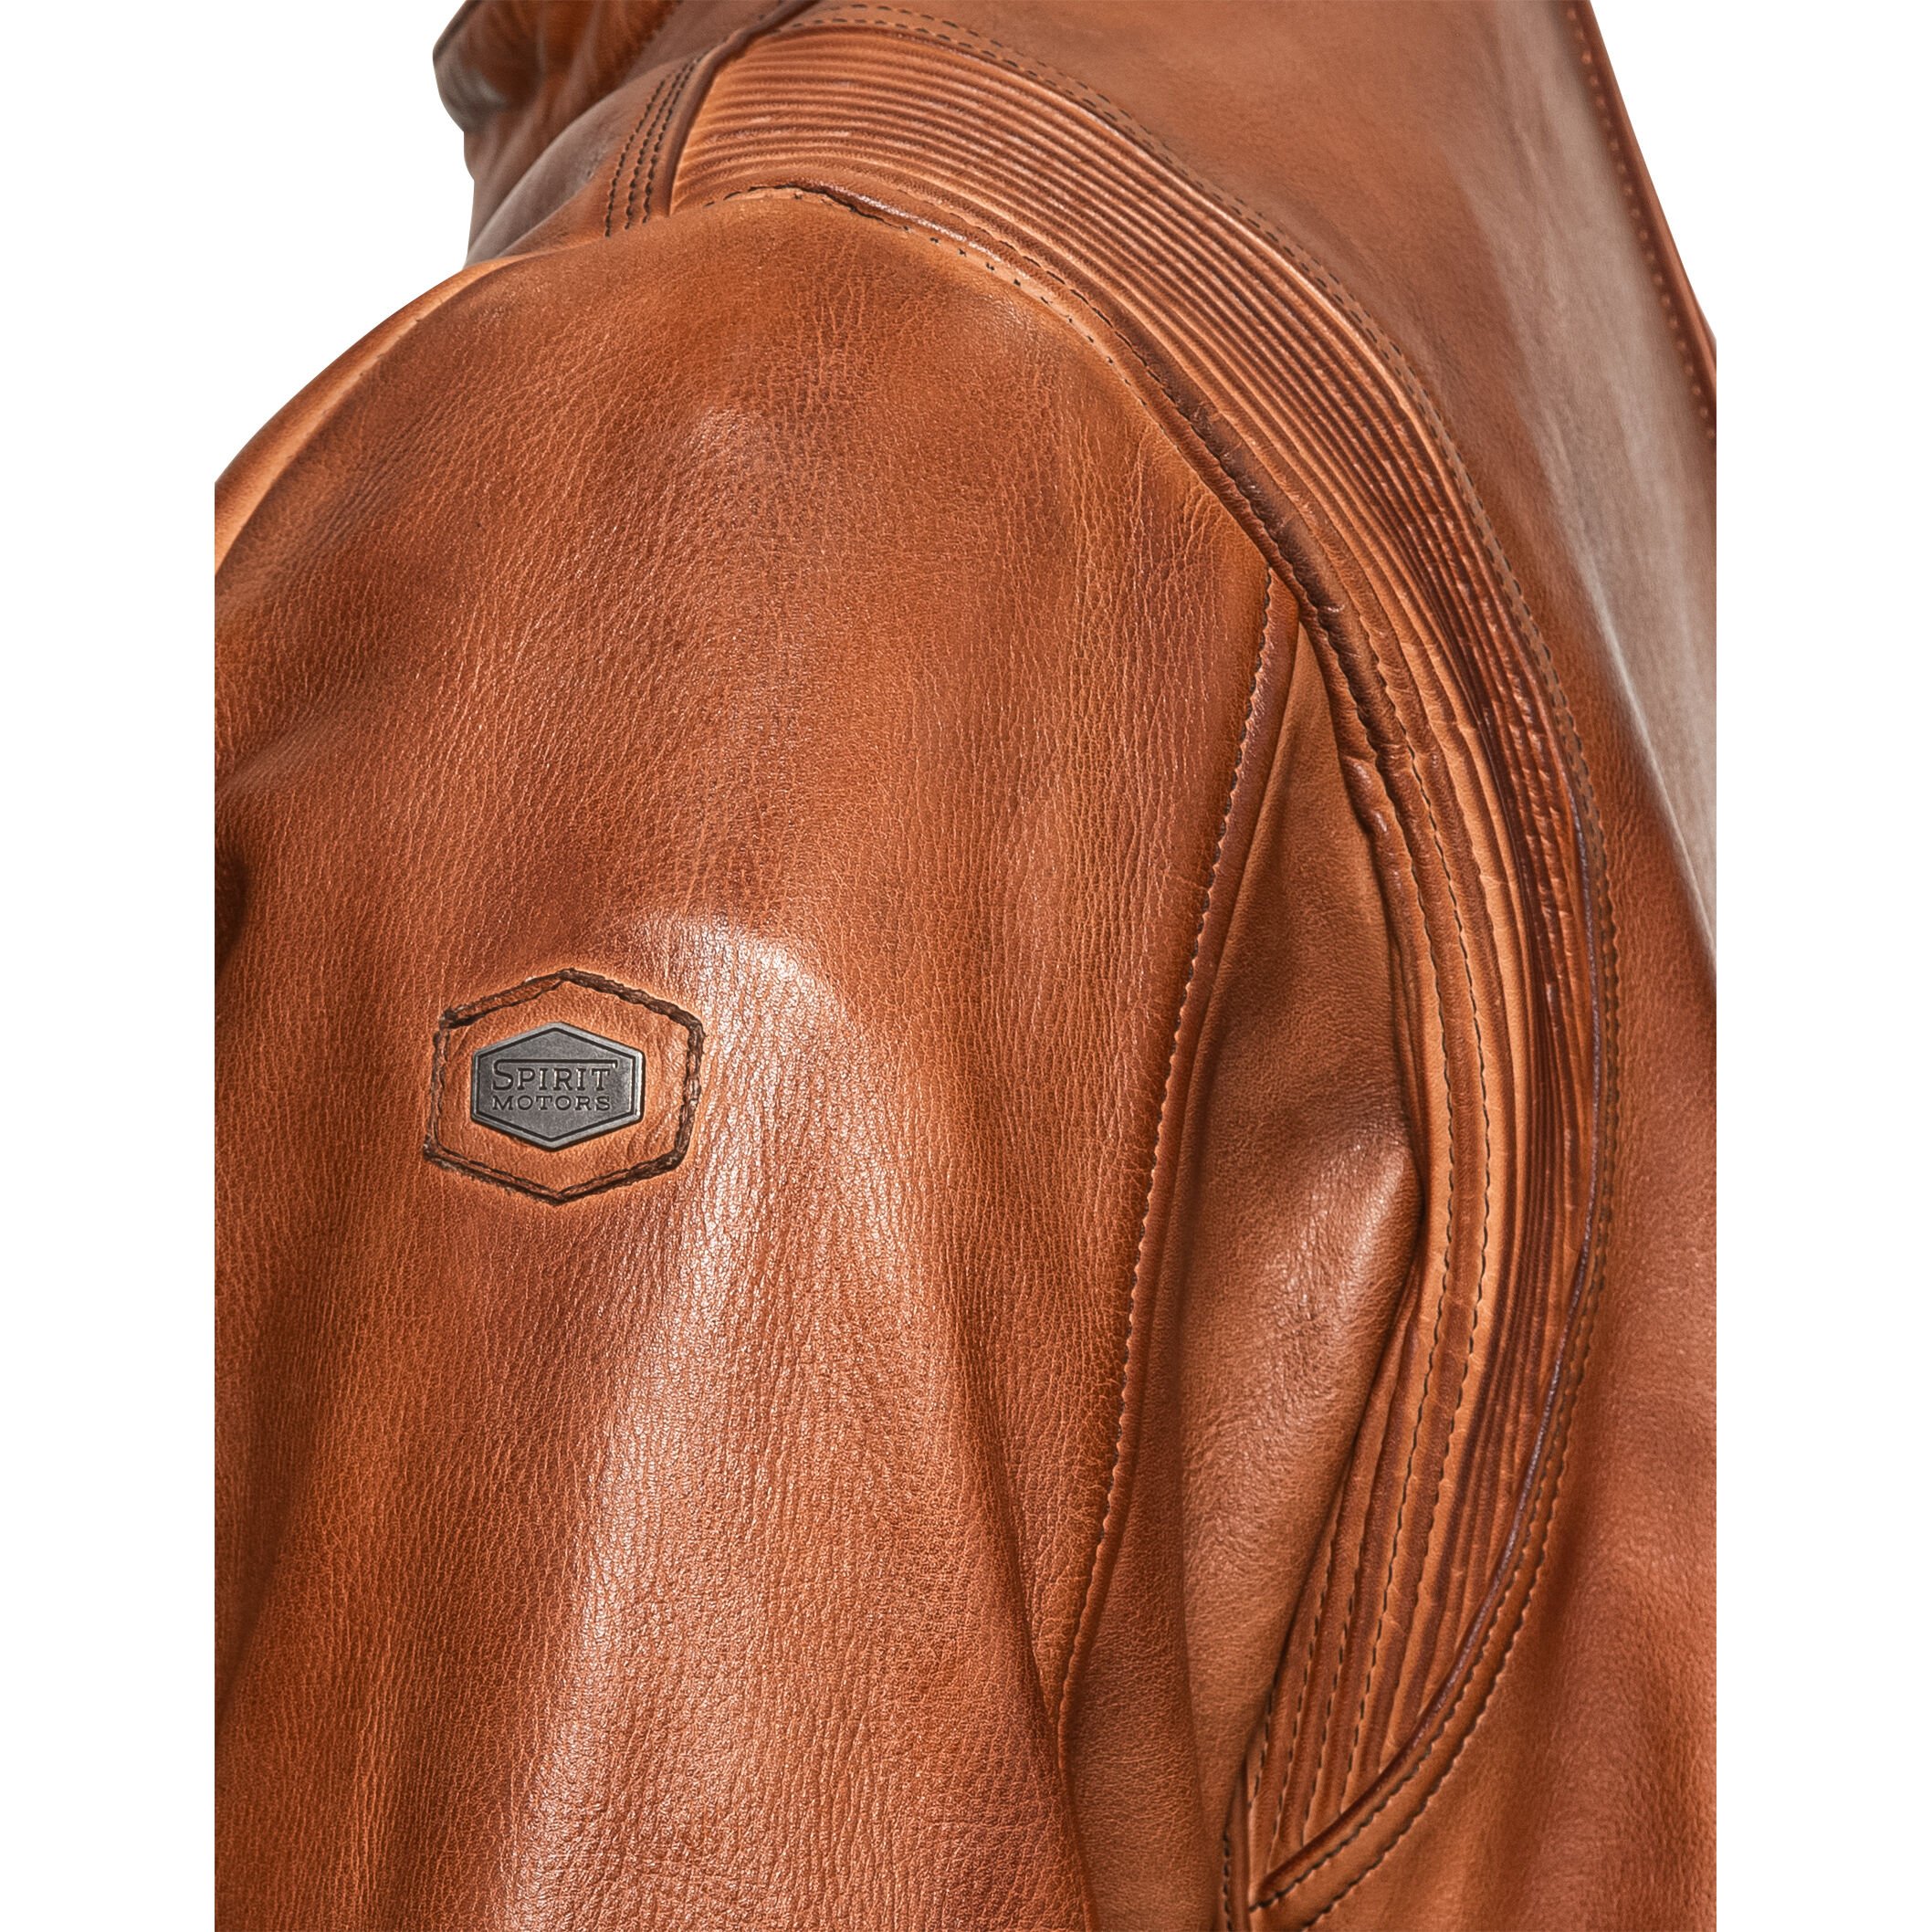 Buy Spirit Motors Retro style leather jacket 5.0 brown XXL Brown